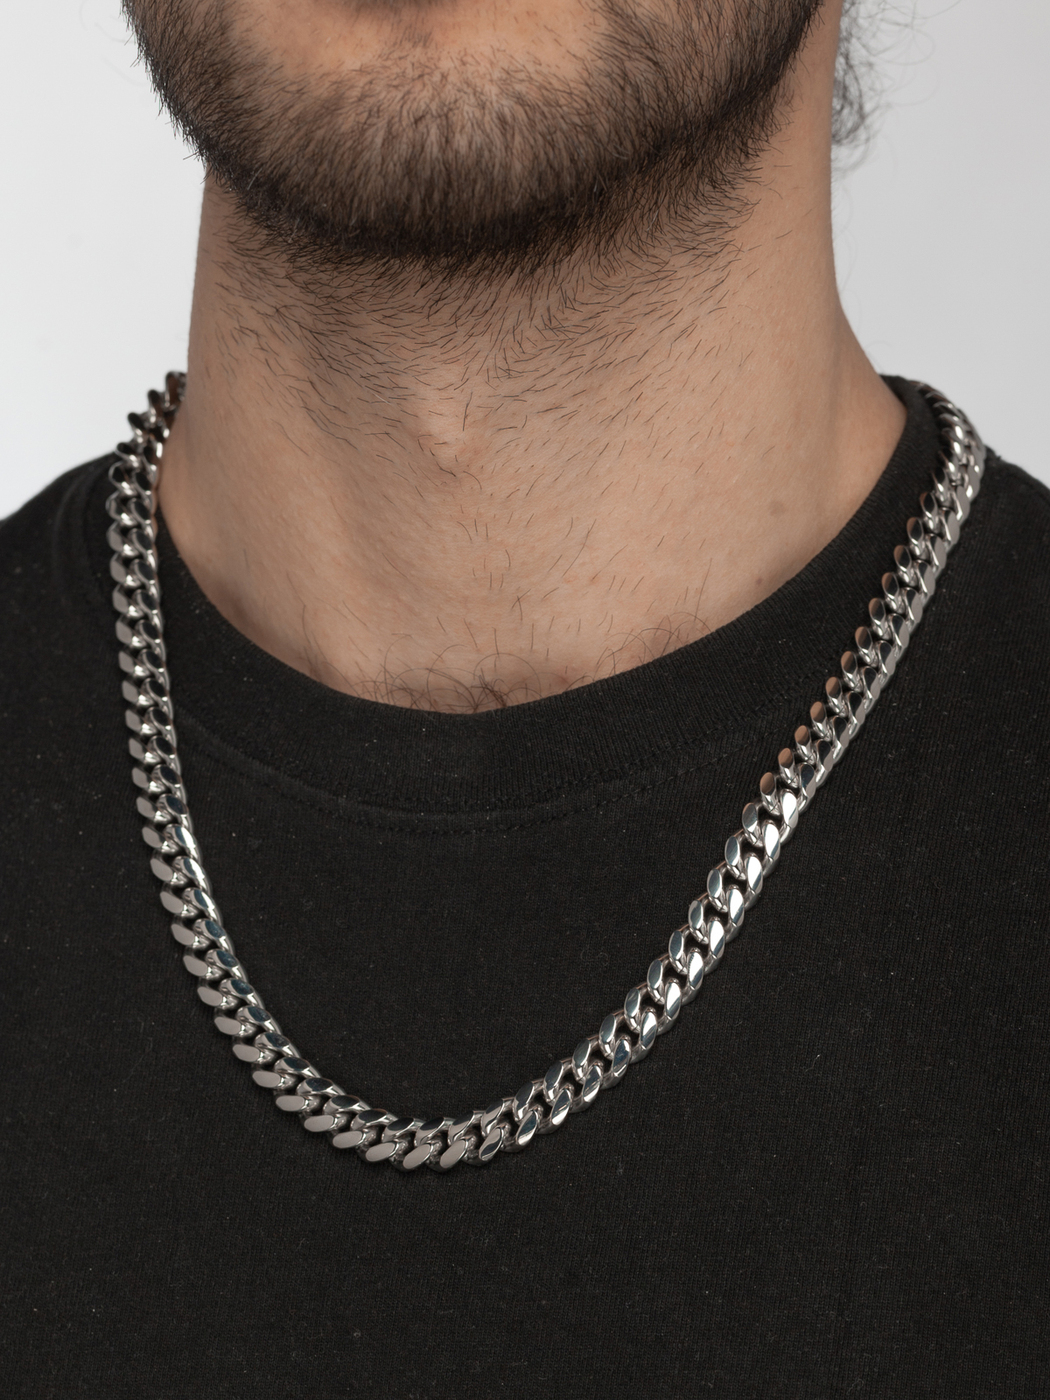 Мужская серебряная цепочка на шею фото